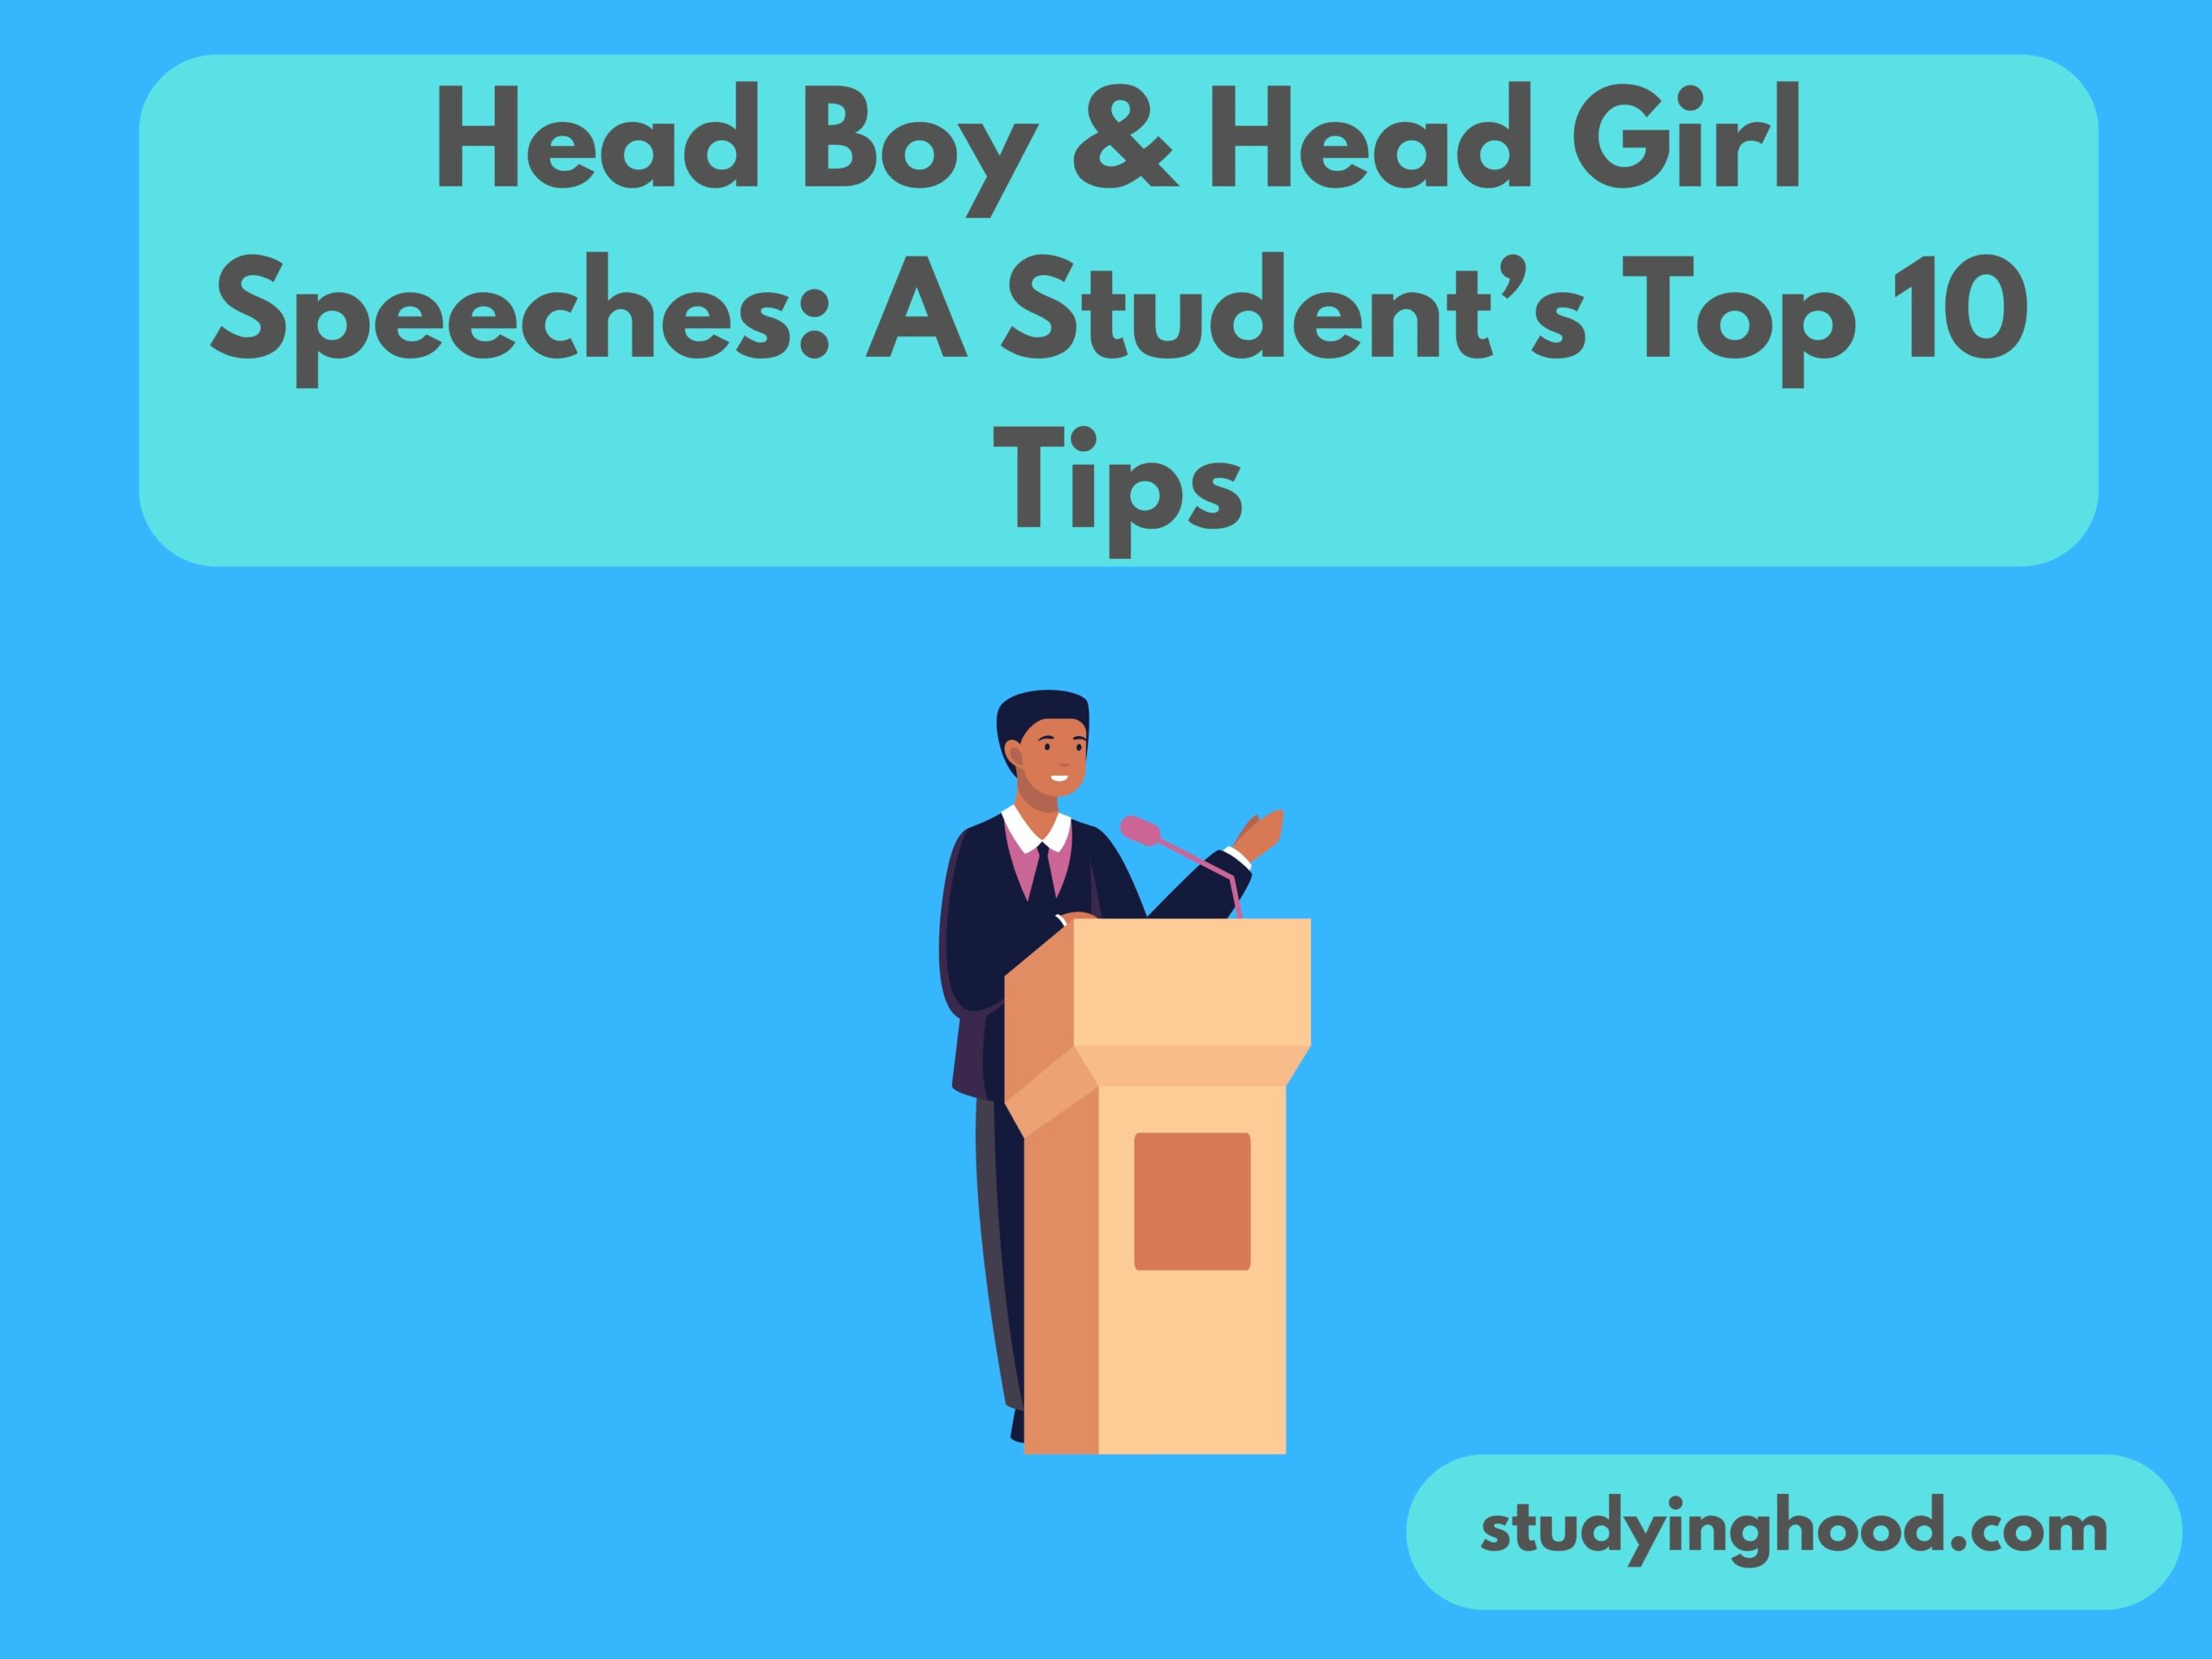 Head Boy & Head Girl Speeches: A Student’s Top 10 Tips